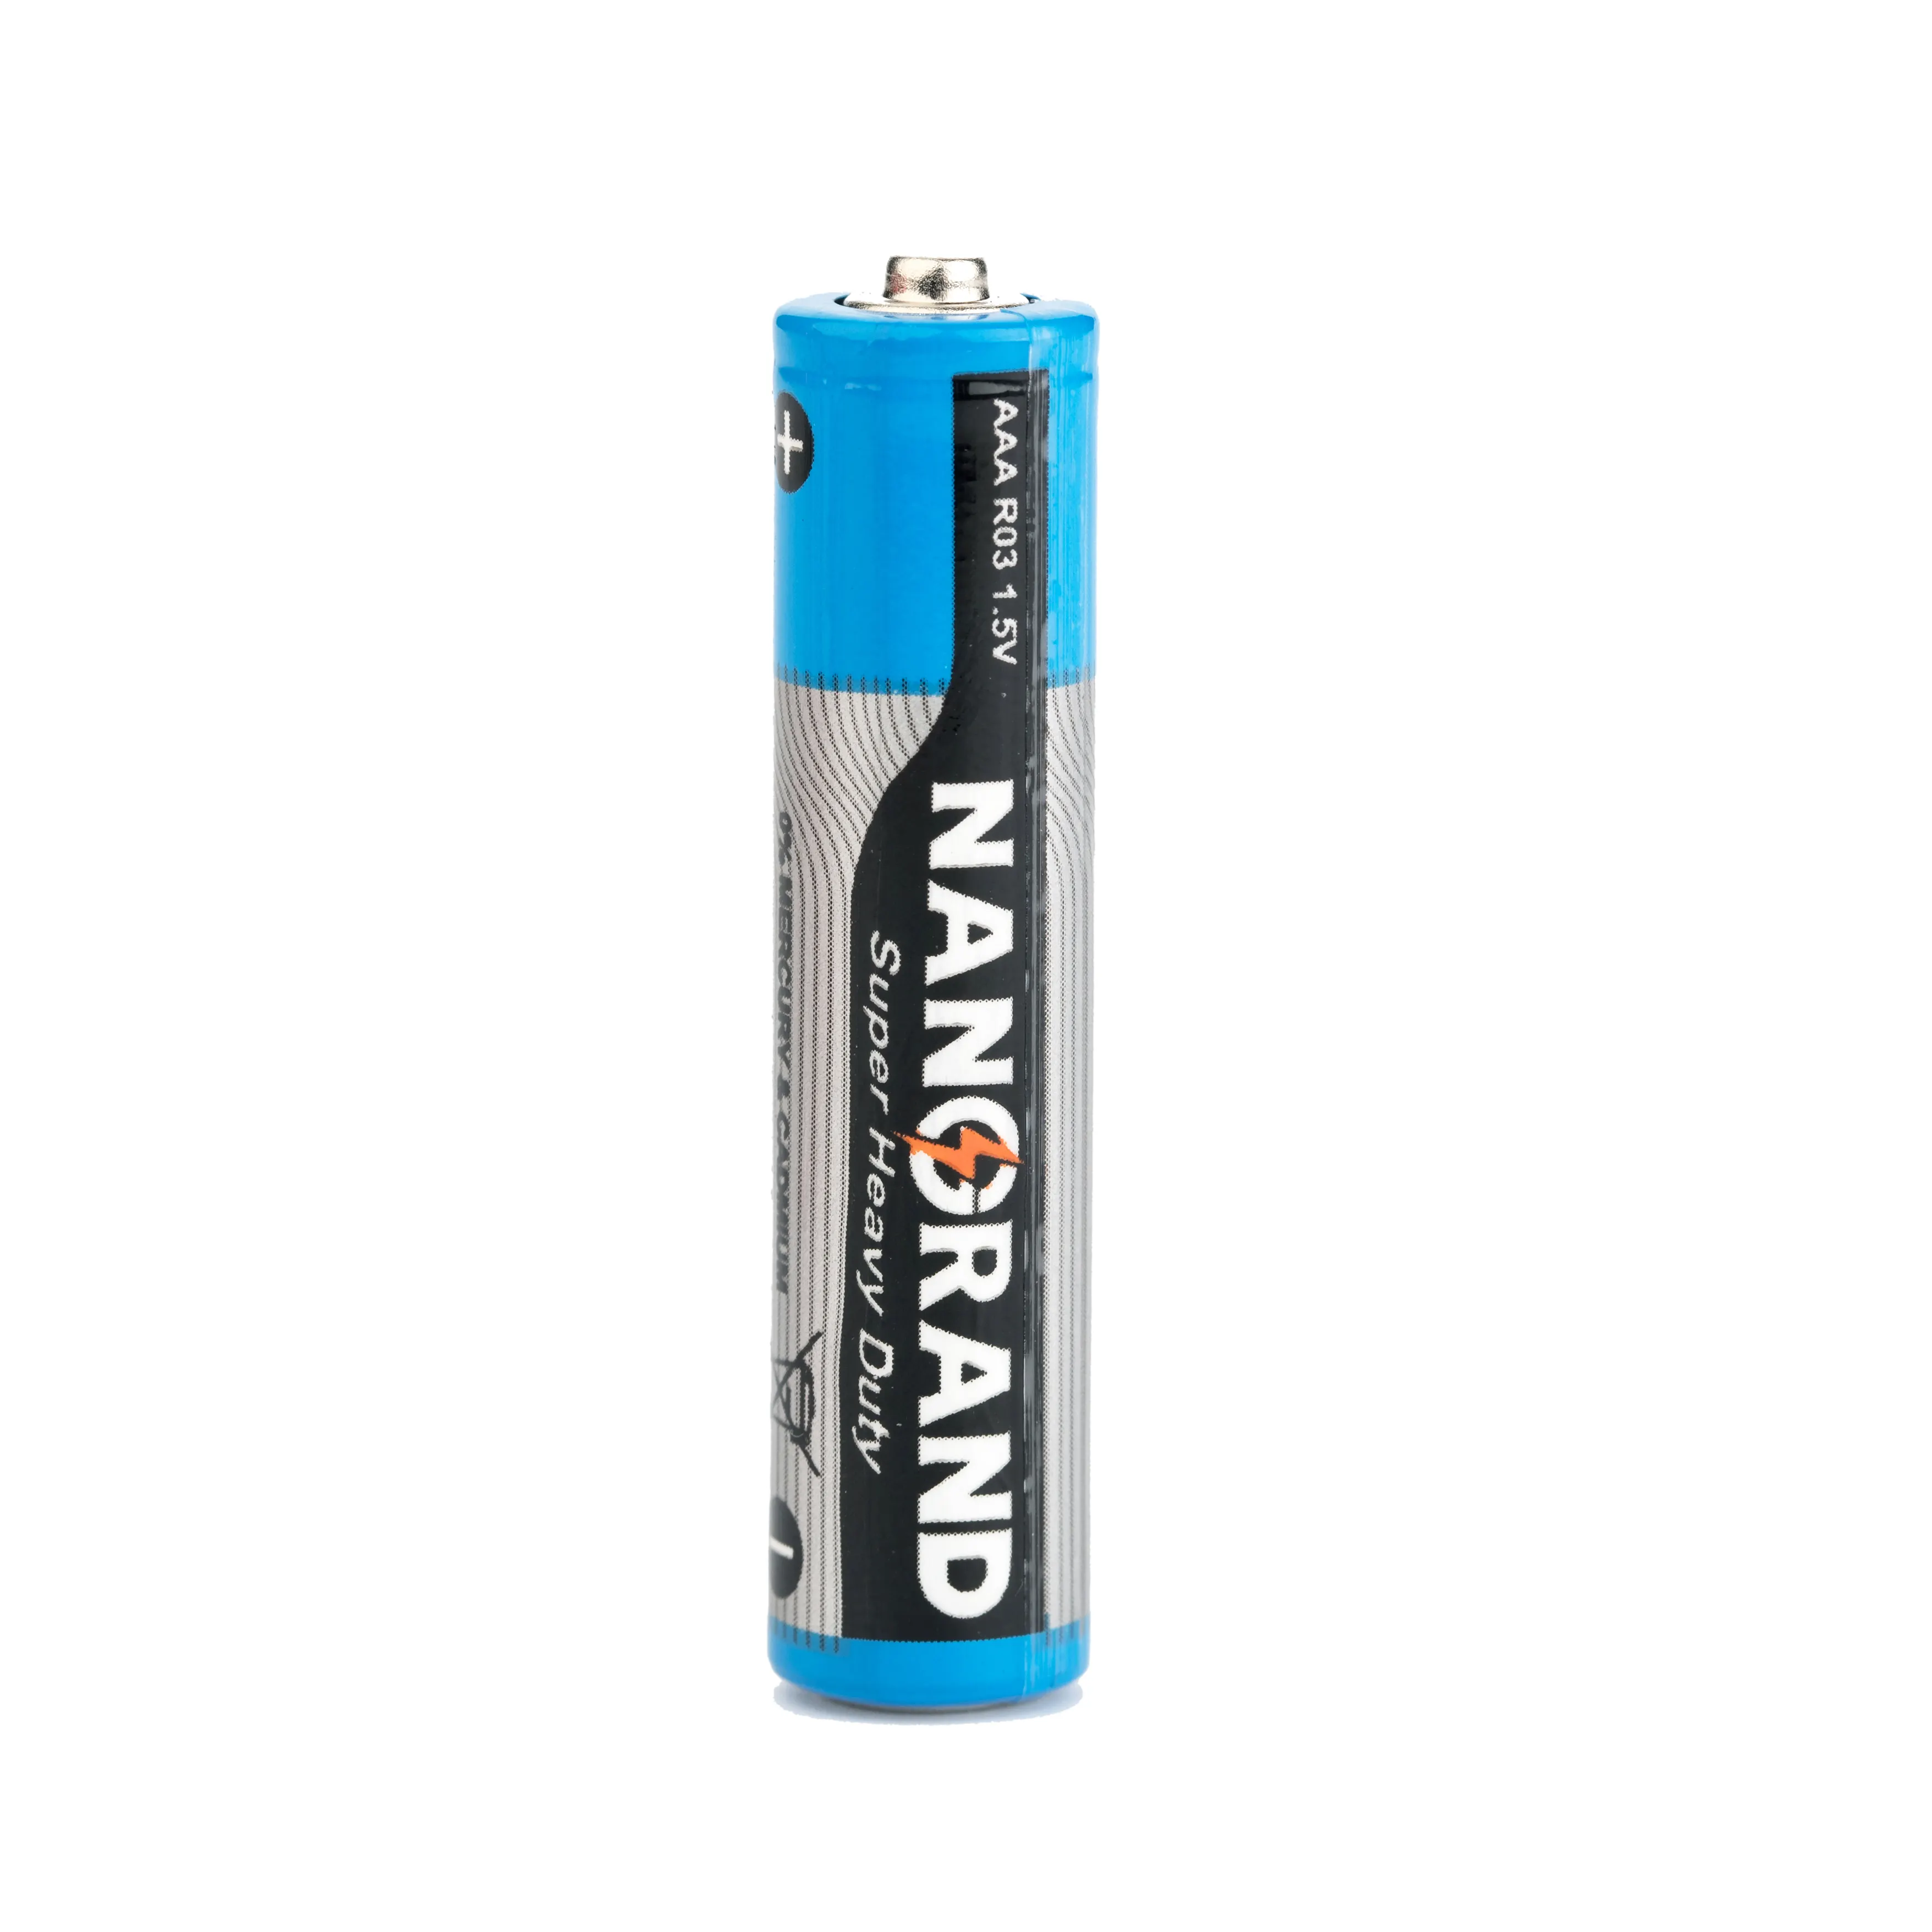 Extra heavy duty batterie aaa Carbon zink 1,5 v